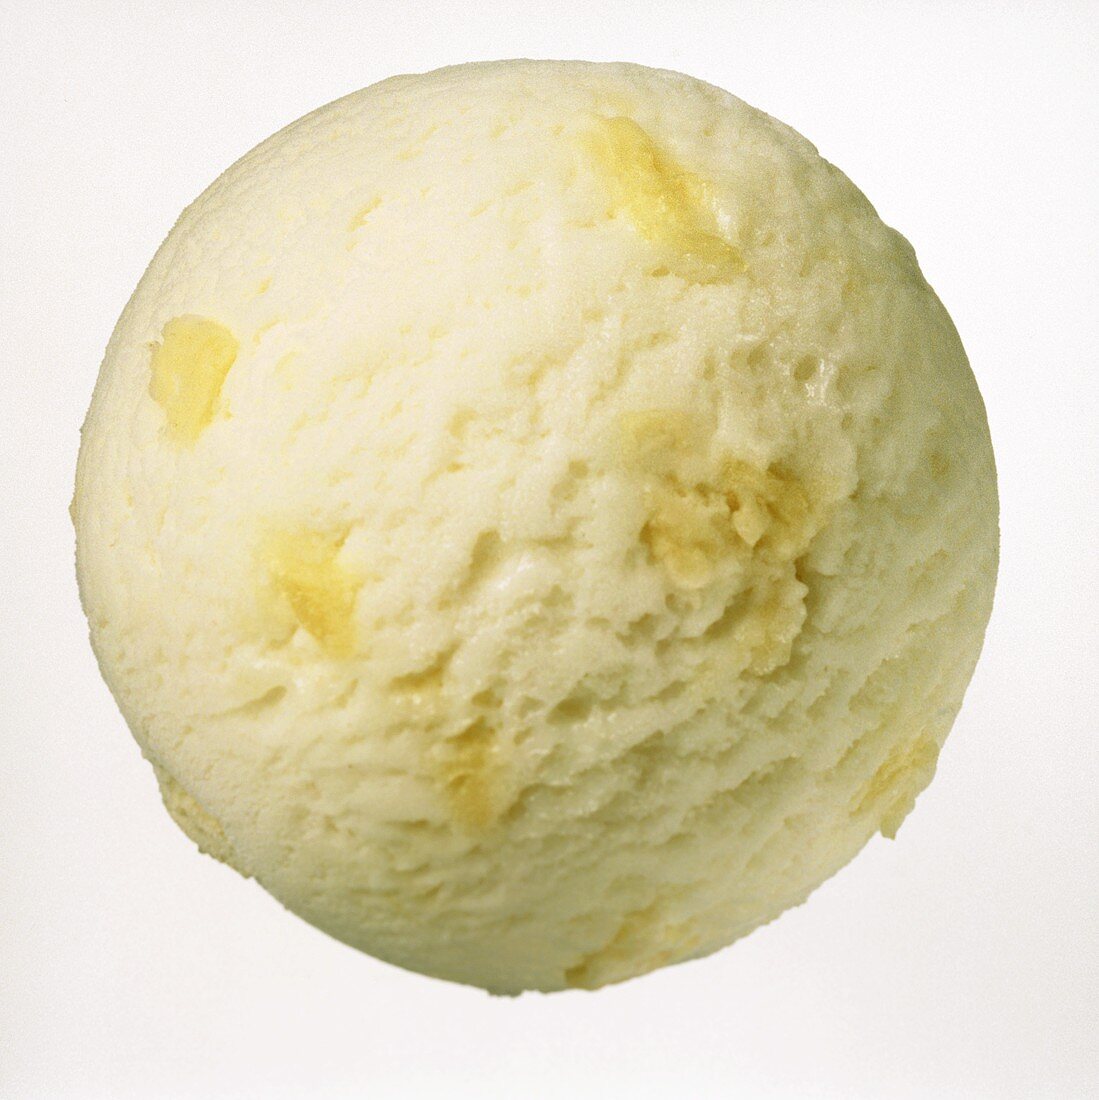 A scoop of pineapple ice cream